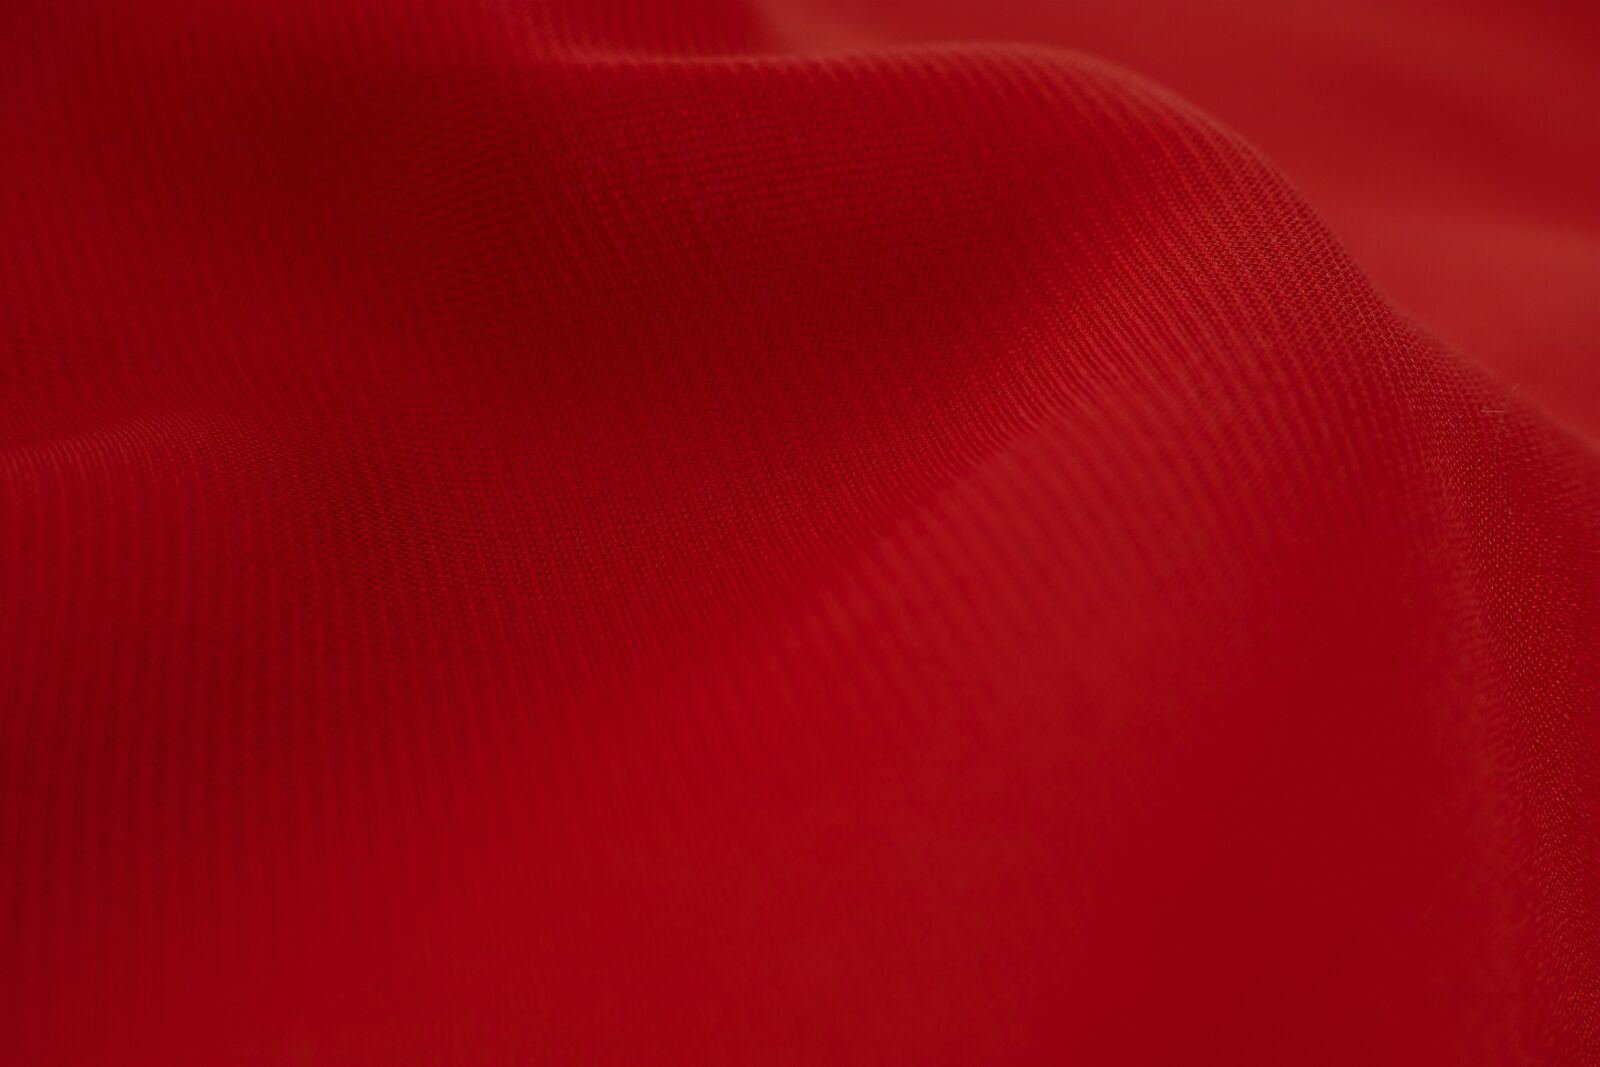 Sigma dp3 Quattro sample photo. Red, fabric, textile photography